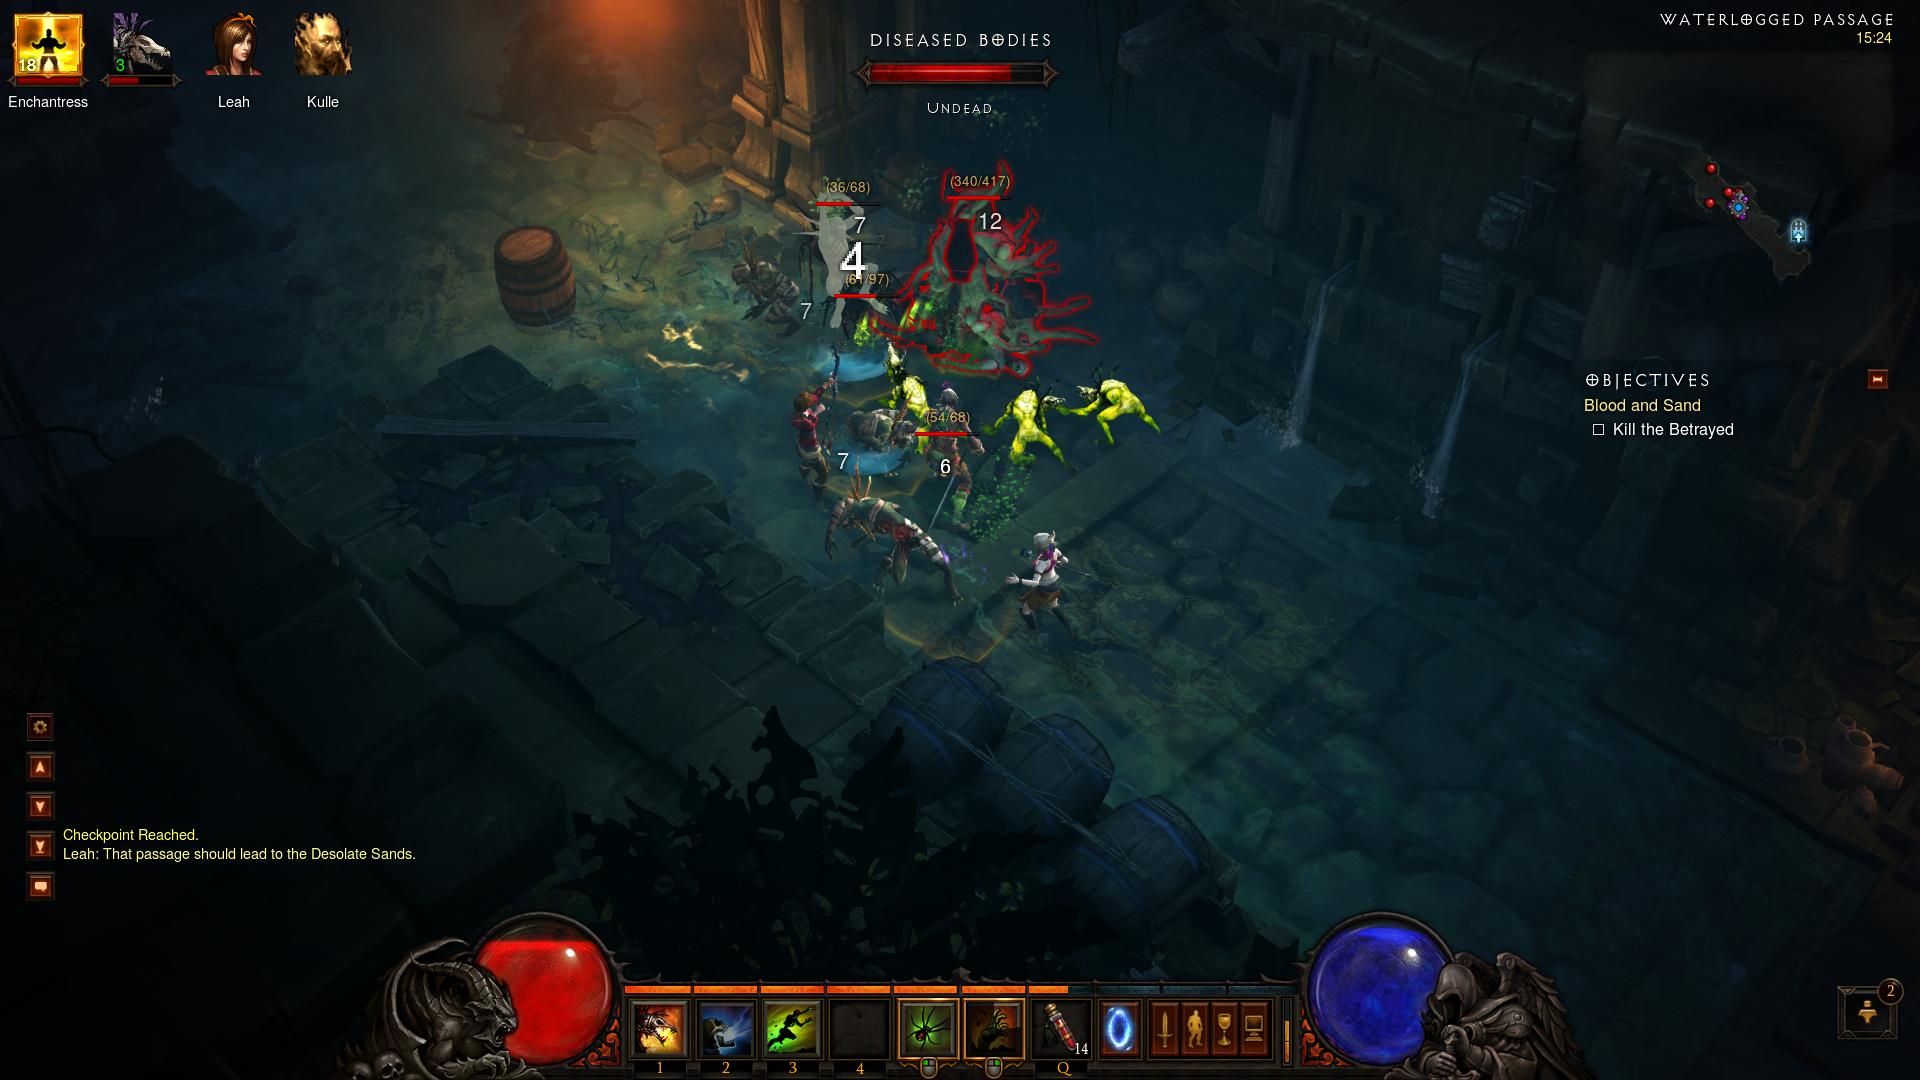 Diablo 3 Waterlogged Passage d3 screenshot